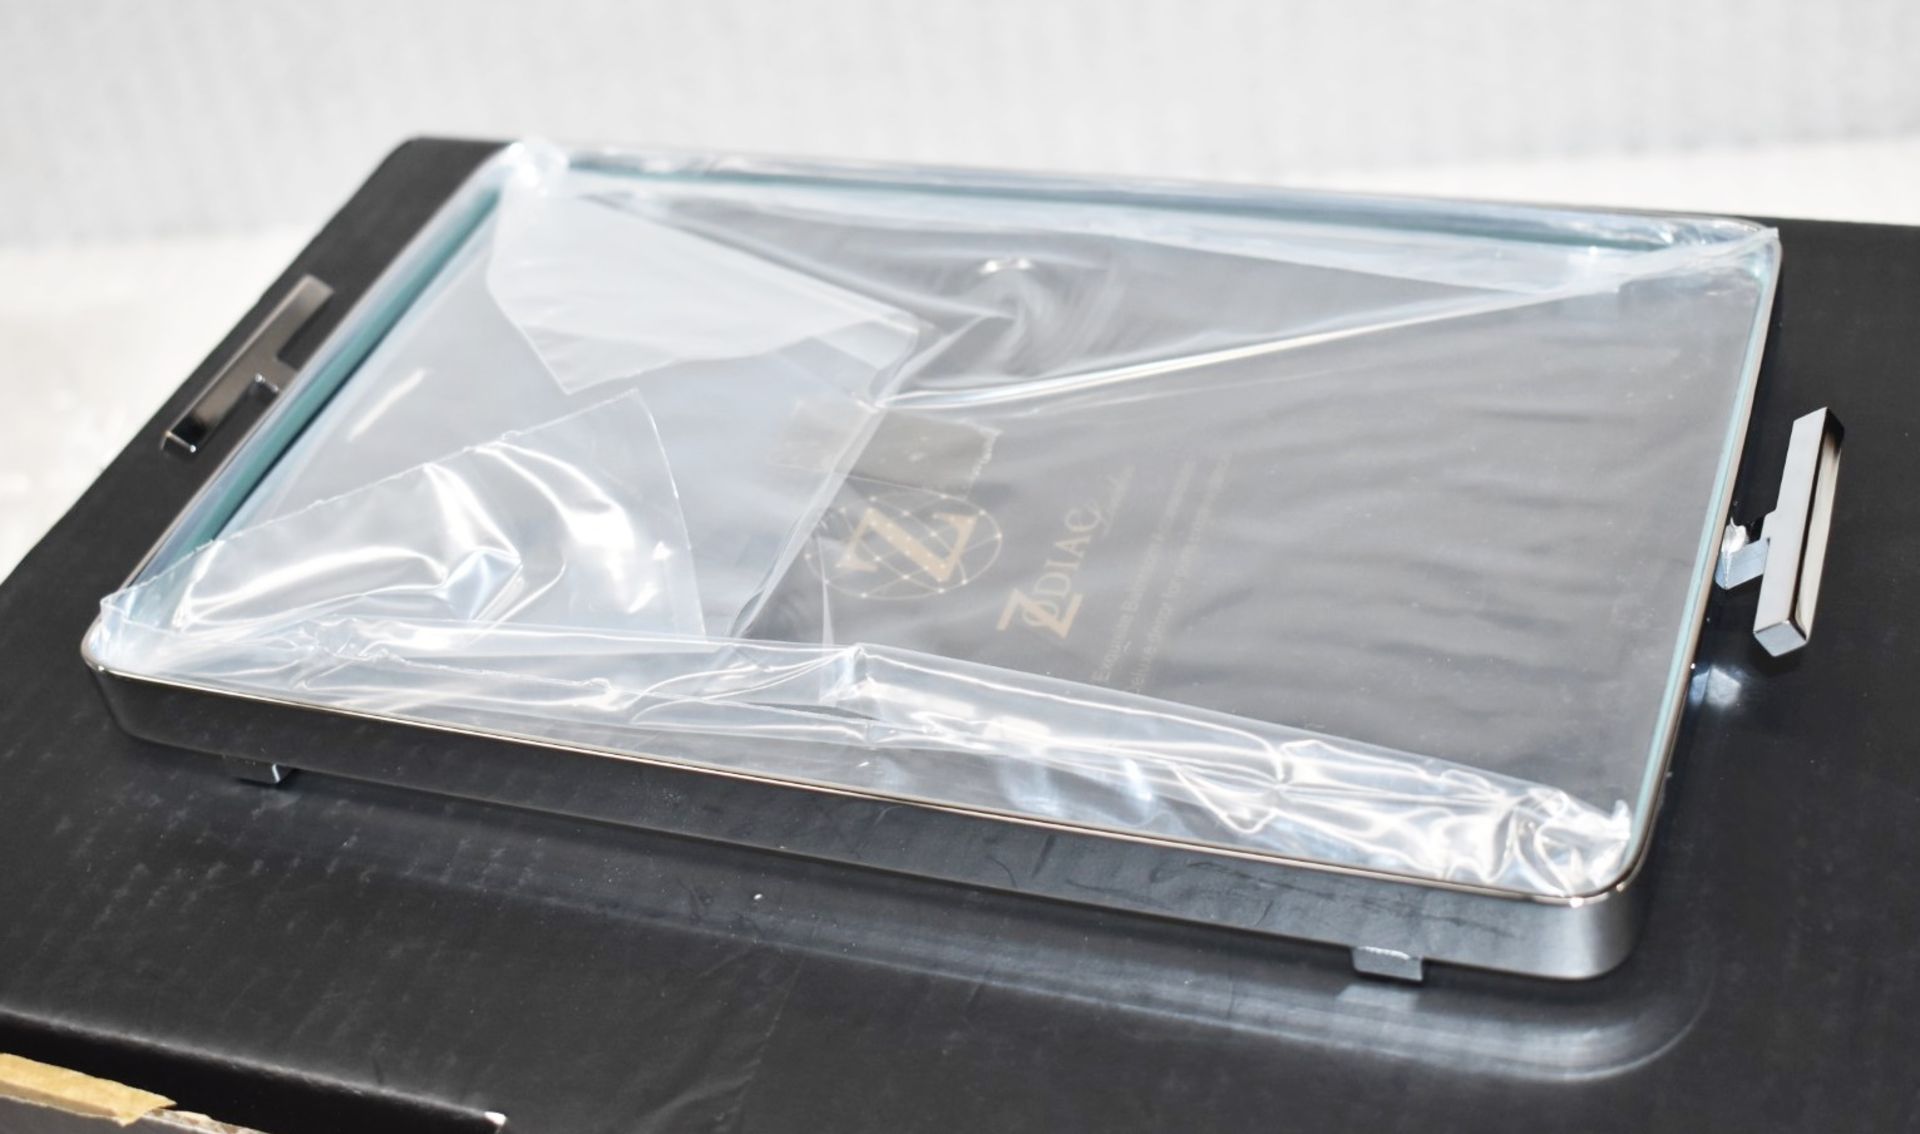 1 x ZODIAC Luxury Chrome Trimmed Glass Tray - Original Price £300.00 - Boxed - Read Full Description - Image 6 of 6